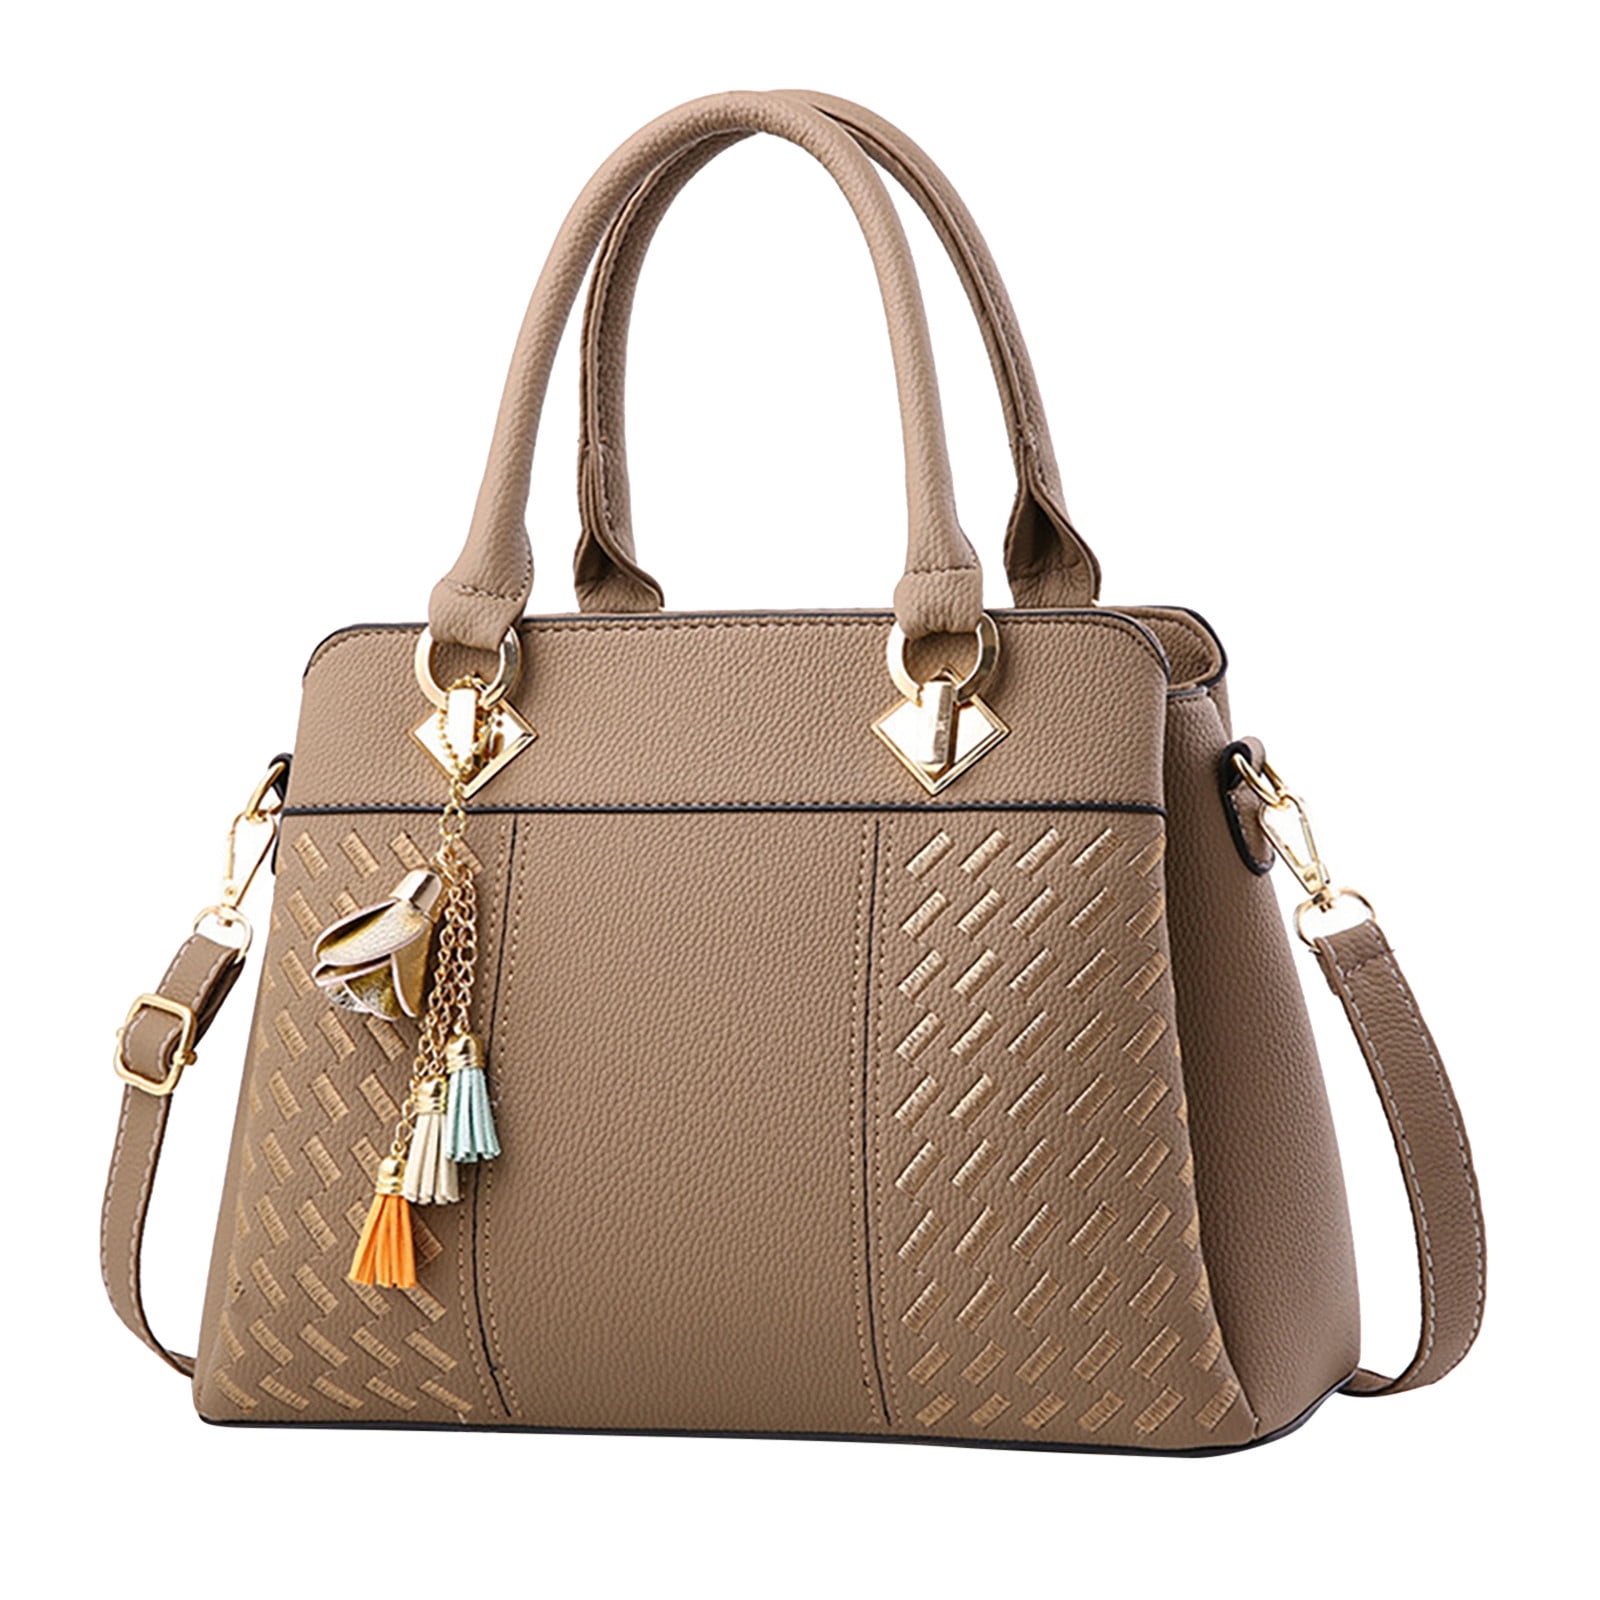 Buy Butterflies Women's Satchel Bag | Ladies Purse Handbag (White:Black)  (BNS 1001WH) at Amazon.in